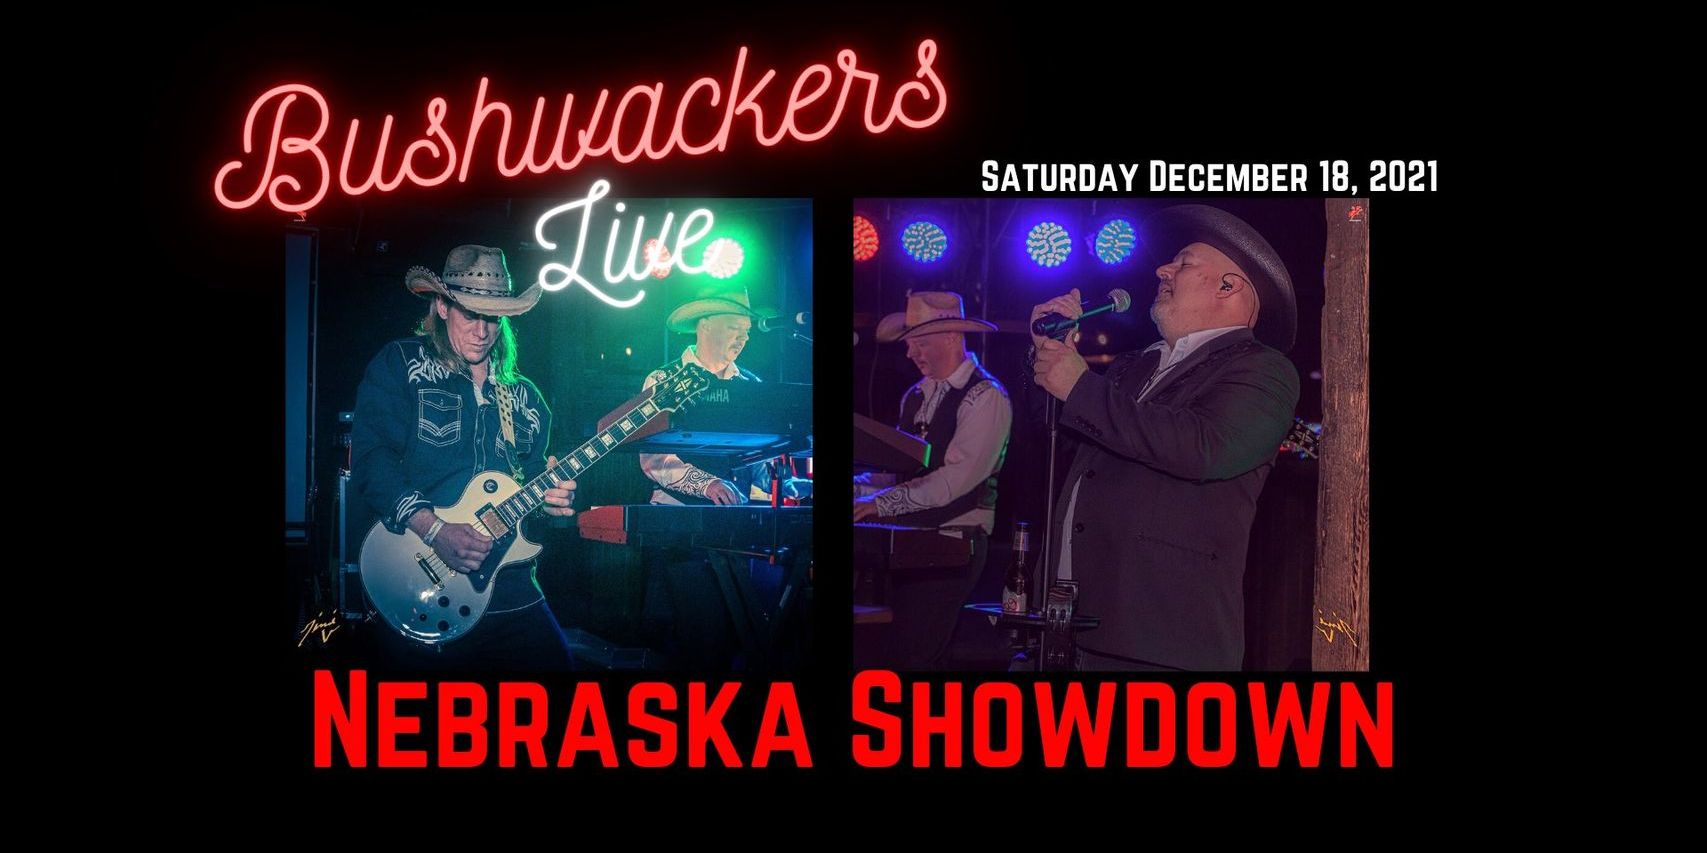 Bushwackers Live: Nebraska Showdown December Show promotional image